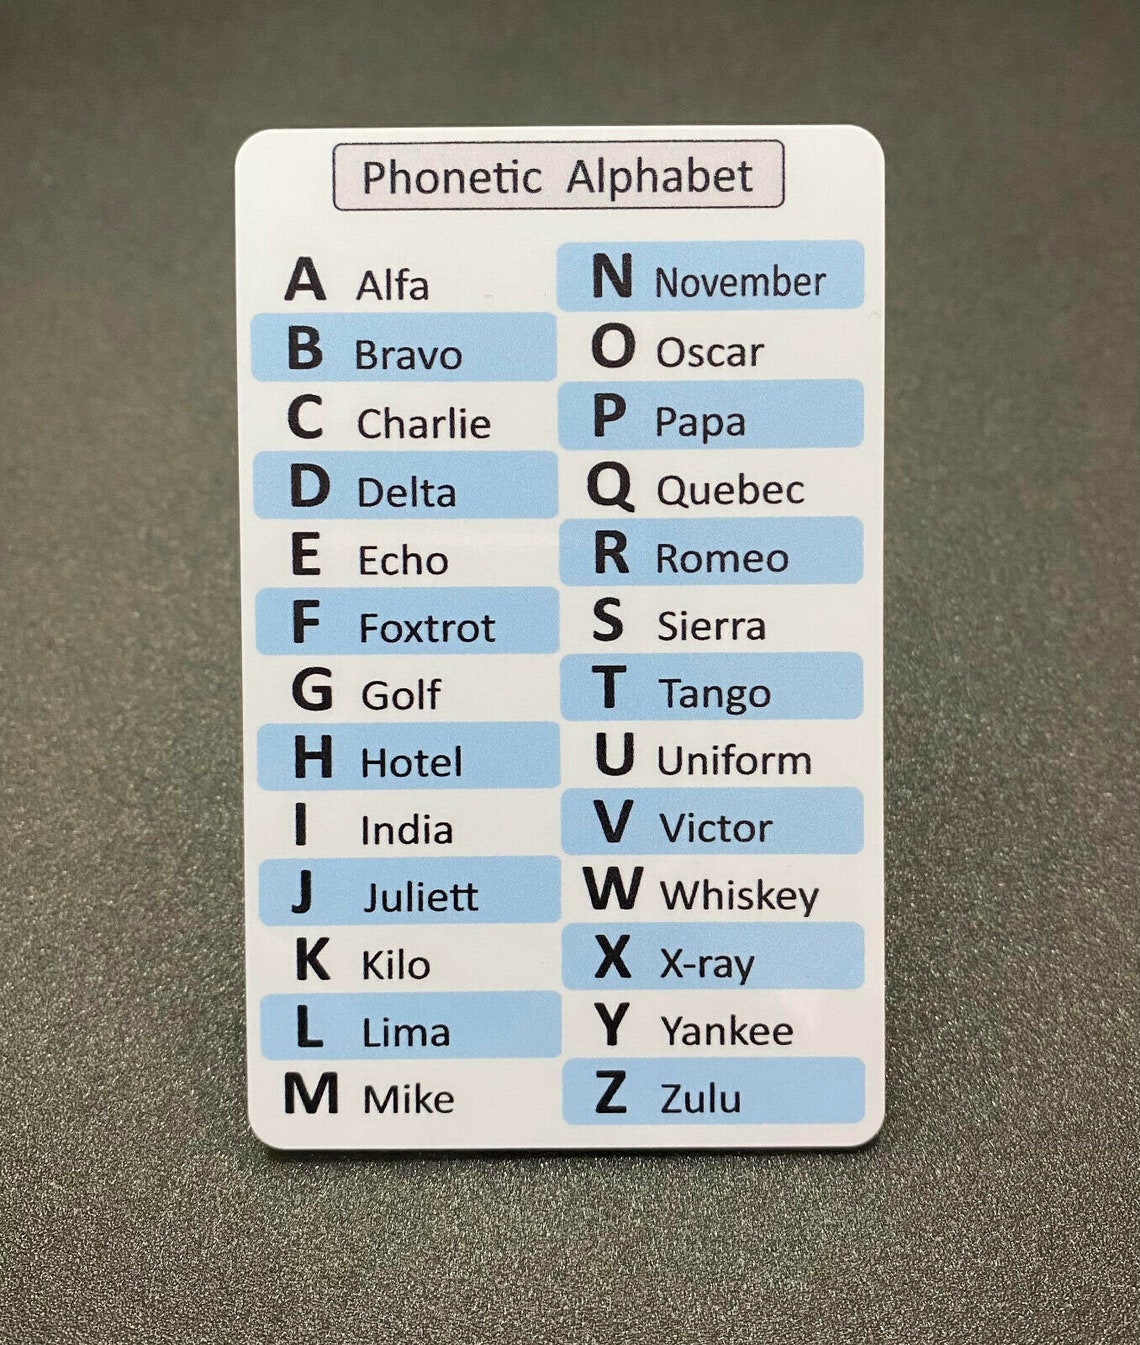 O Phonetic Alphabet